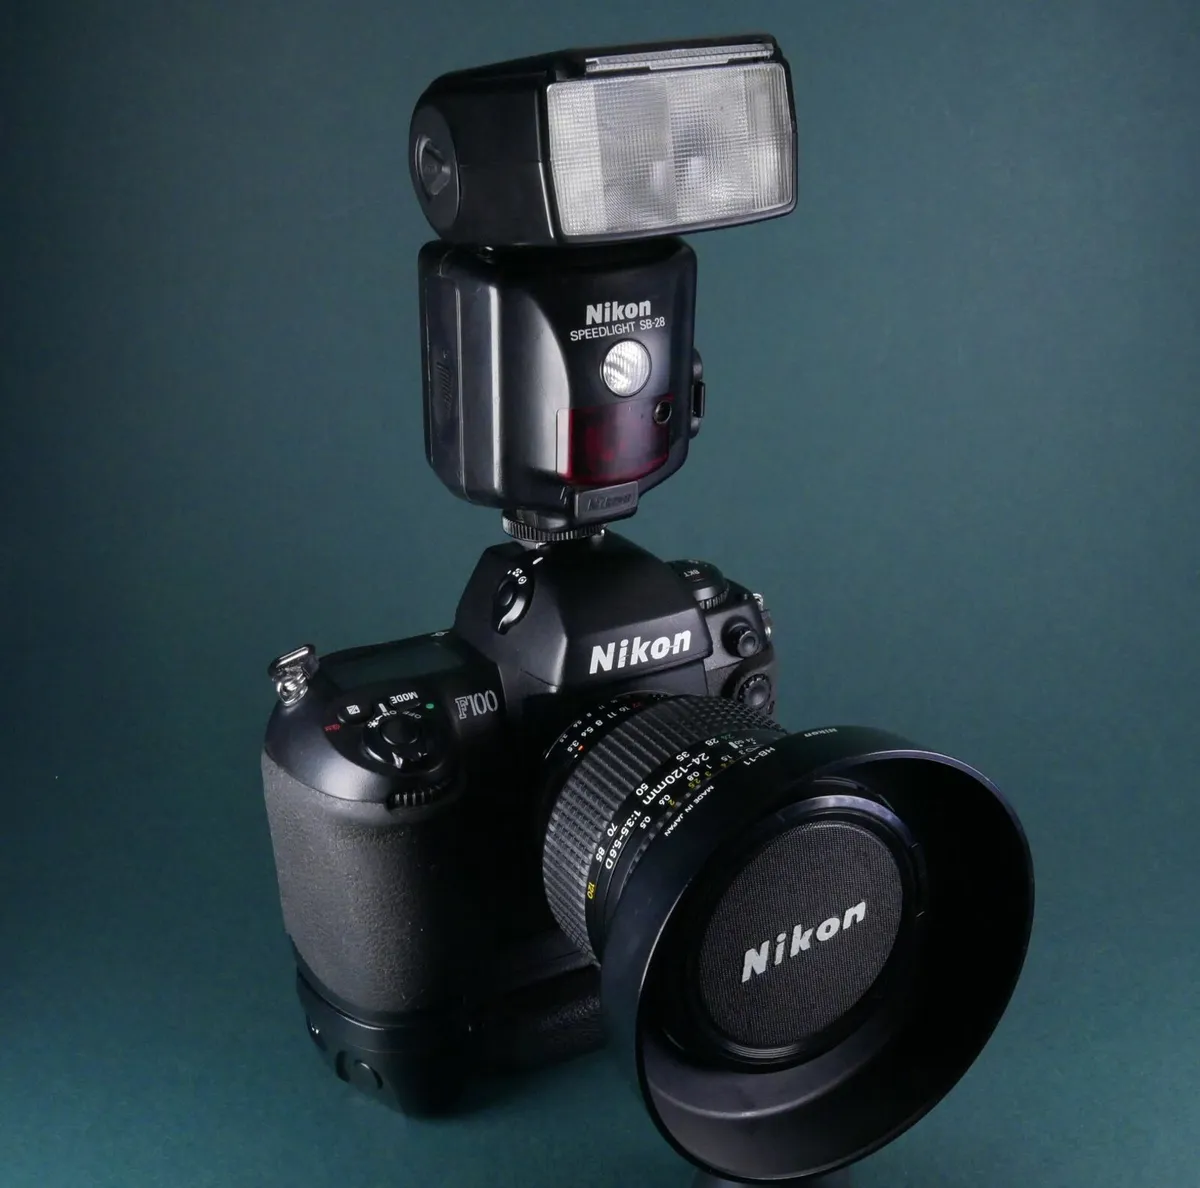 Nikon F100 film camera with accessories